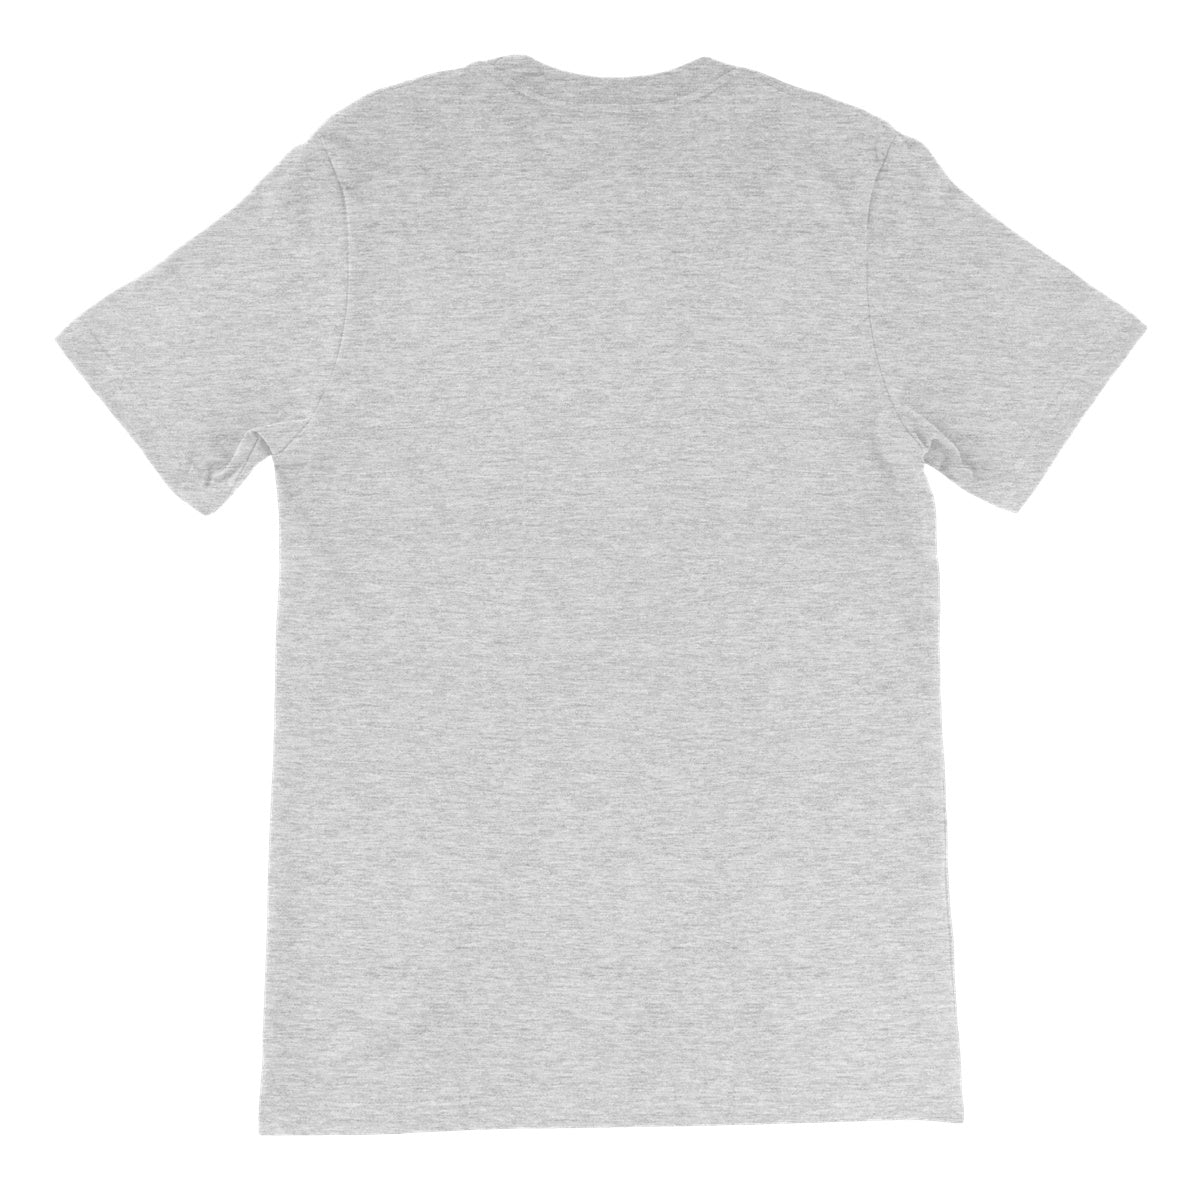 Little Shop Illustrated Tee Unisex Short Sleeve T-Shirt